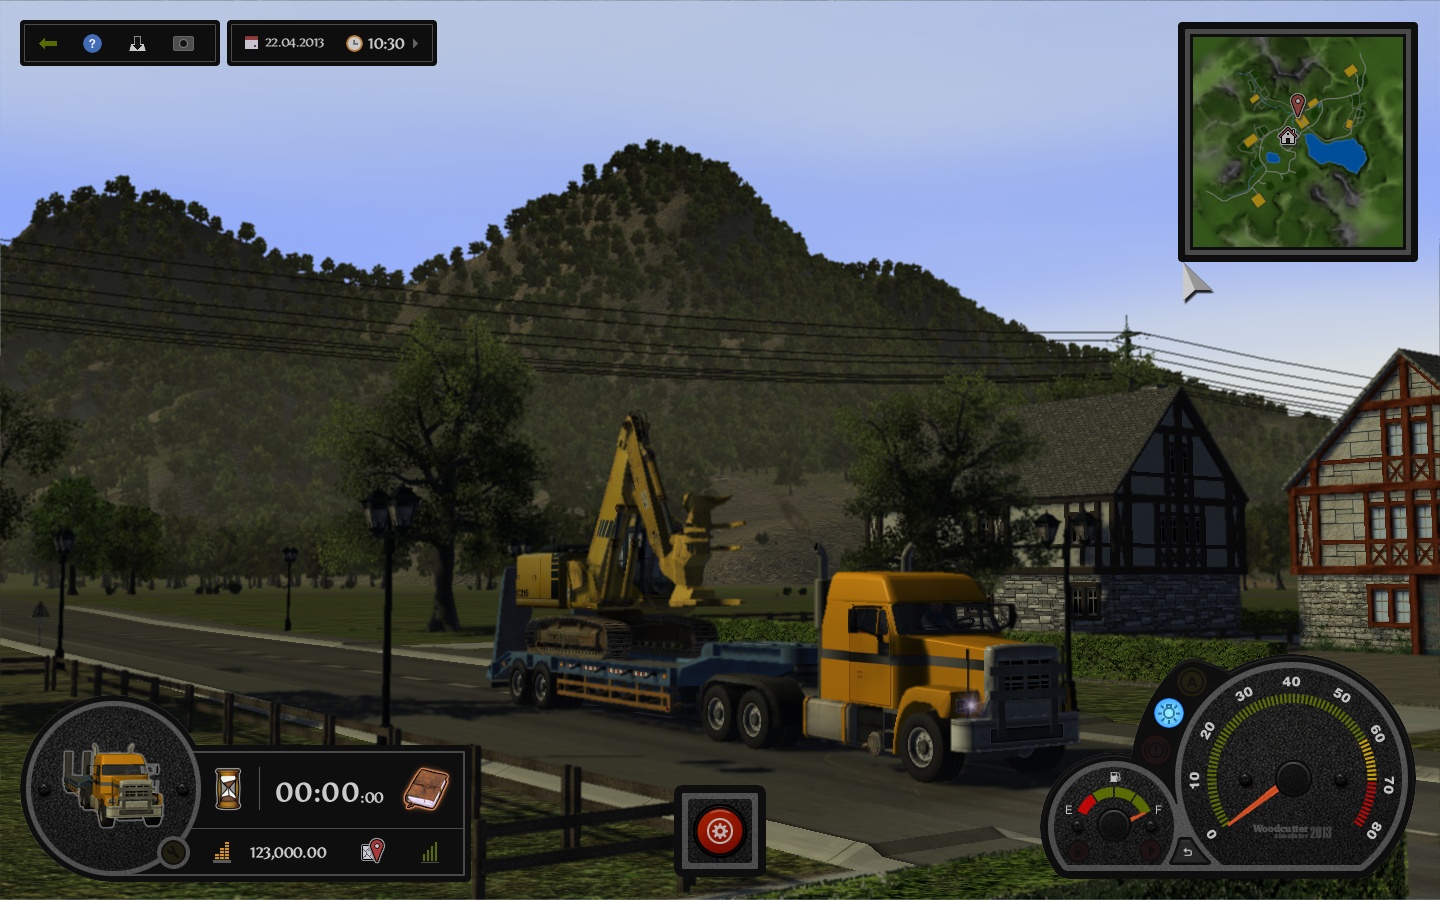 Woodcutter Simulator 2013 Featured Screenshot #1